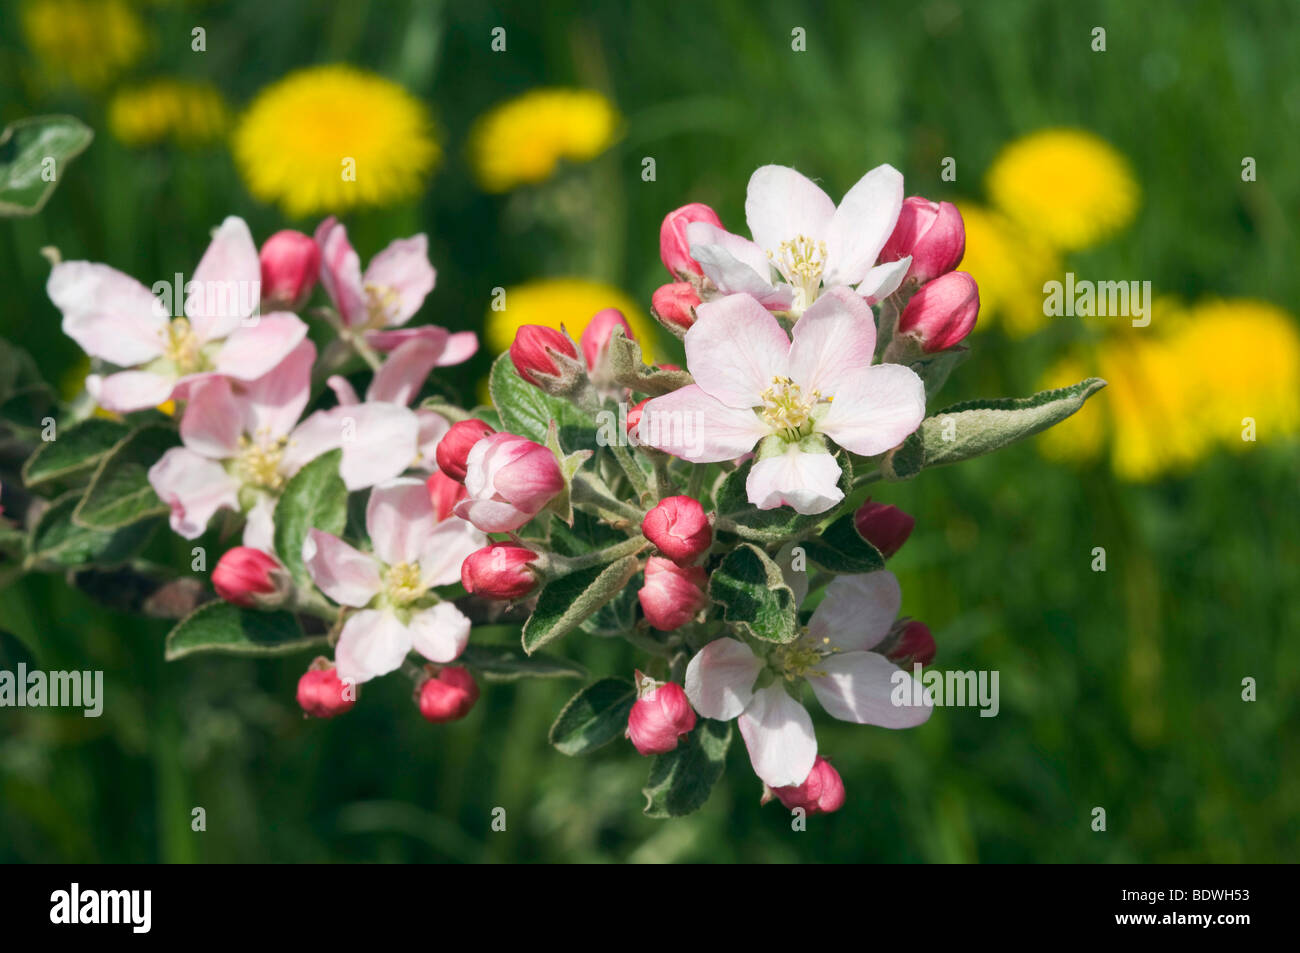 Apple Blossom, Scena, Tirolo, pays, Trentino Alto Adige, Italie, Europe Banque D'Images